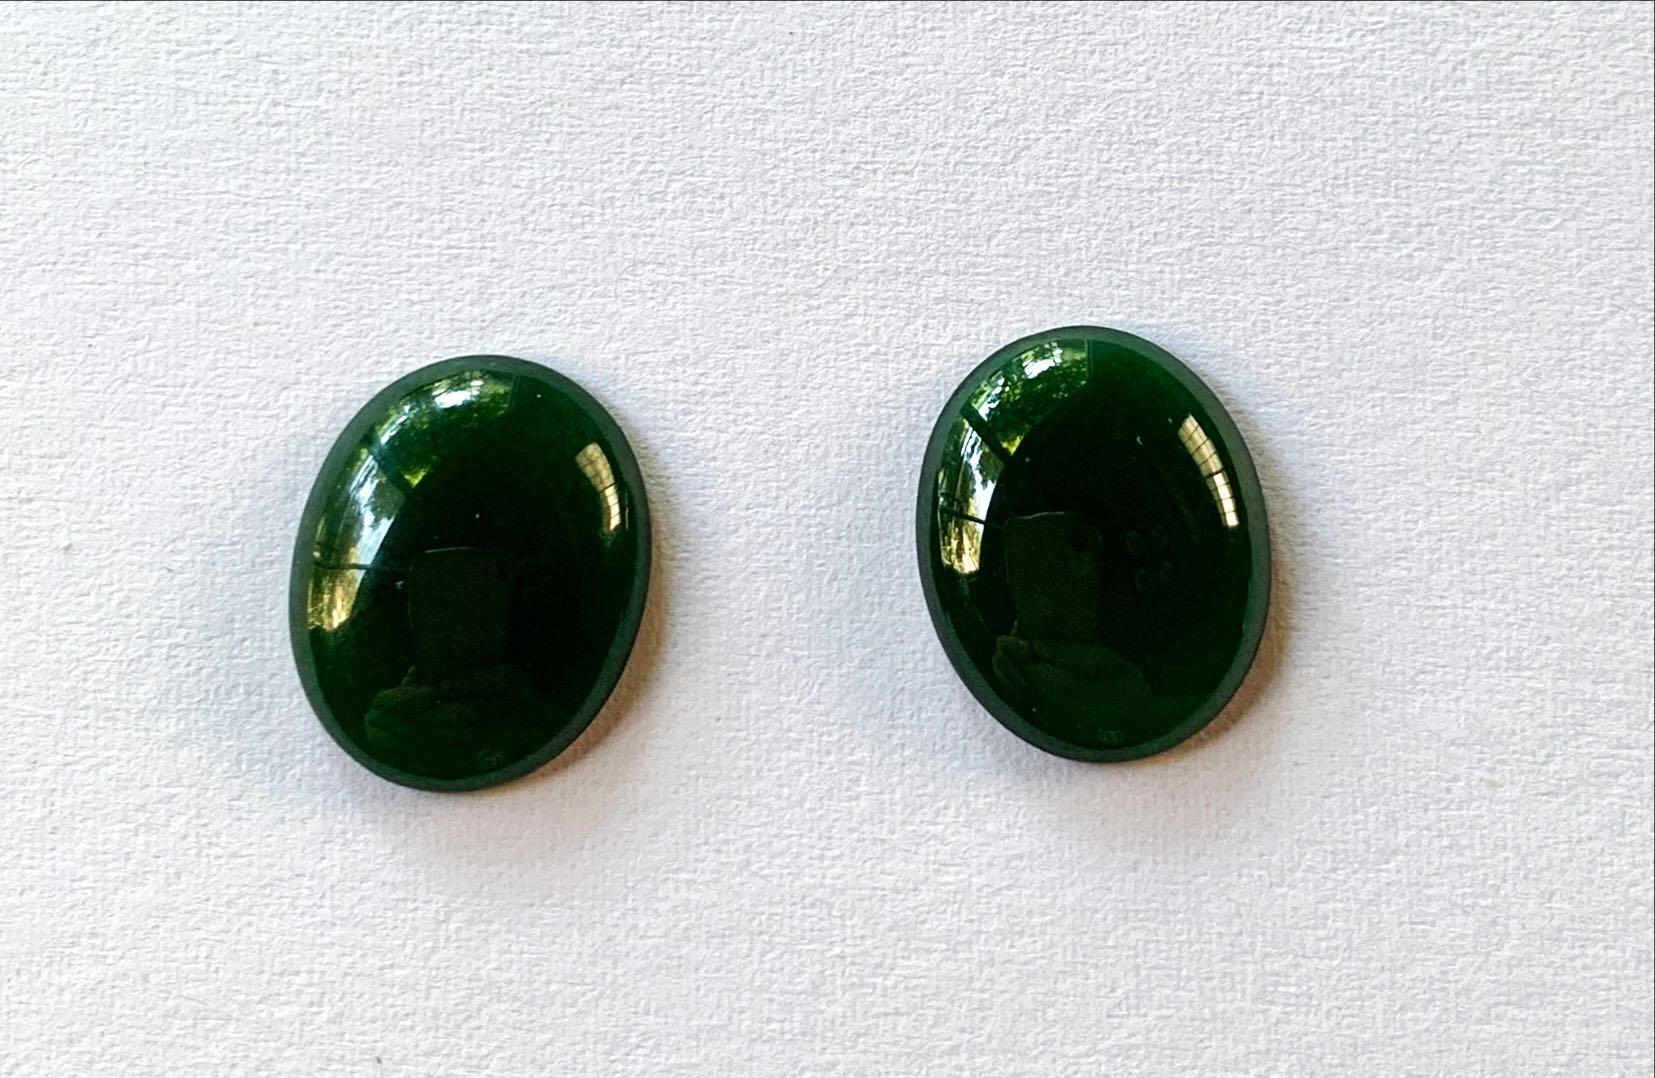 Green Rokan Myanmar Jadeite Loose Stones 2pcs 4.3/4.6 ct Grade A #1 In New Condition For Sale In 渋谷区, JP